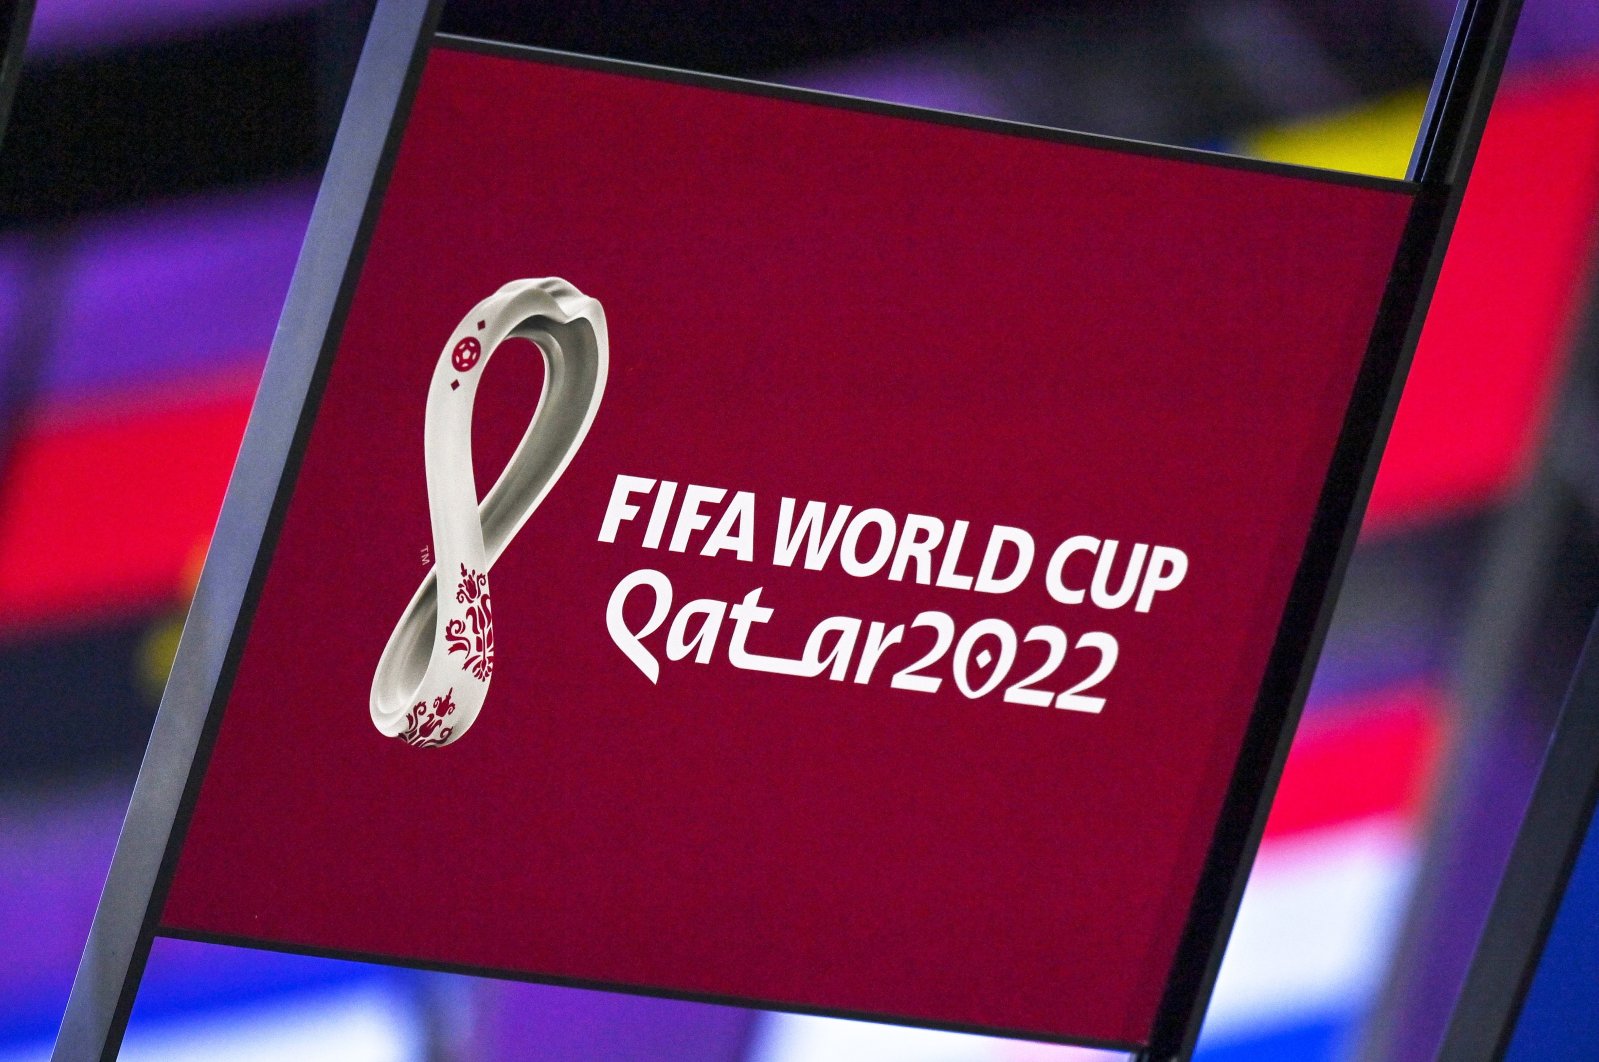 A FIFA World Cup Qatar 2022 sign during the 72nd FIFA Congress in Doha, Qatar, March 31, 2022. (EPA Photo)